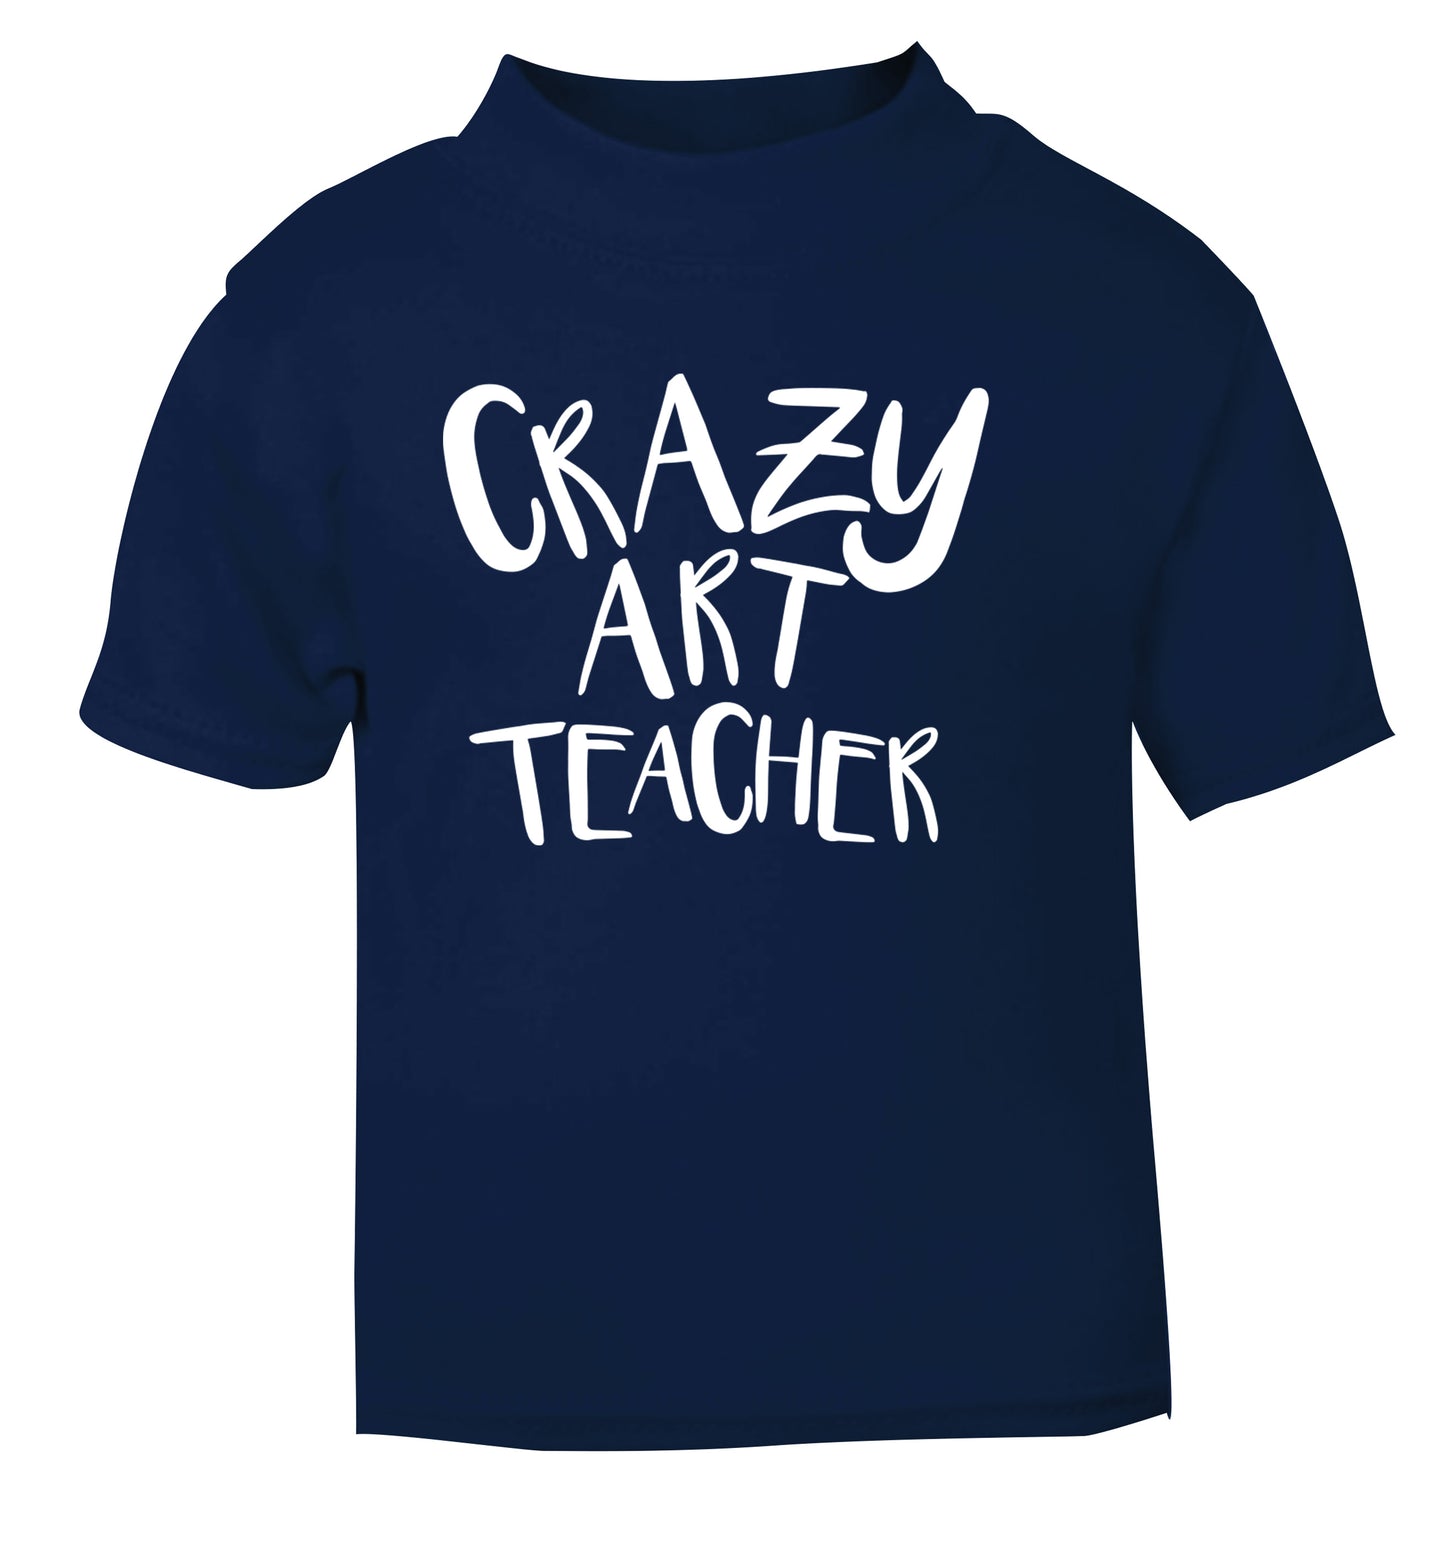 Crazy art teacher navy Baby Toddler Tshirt 2 Years